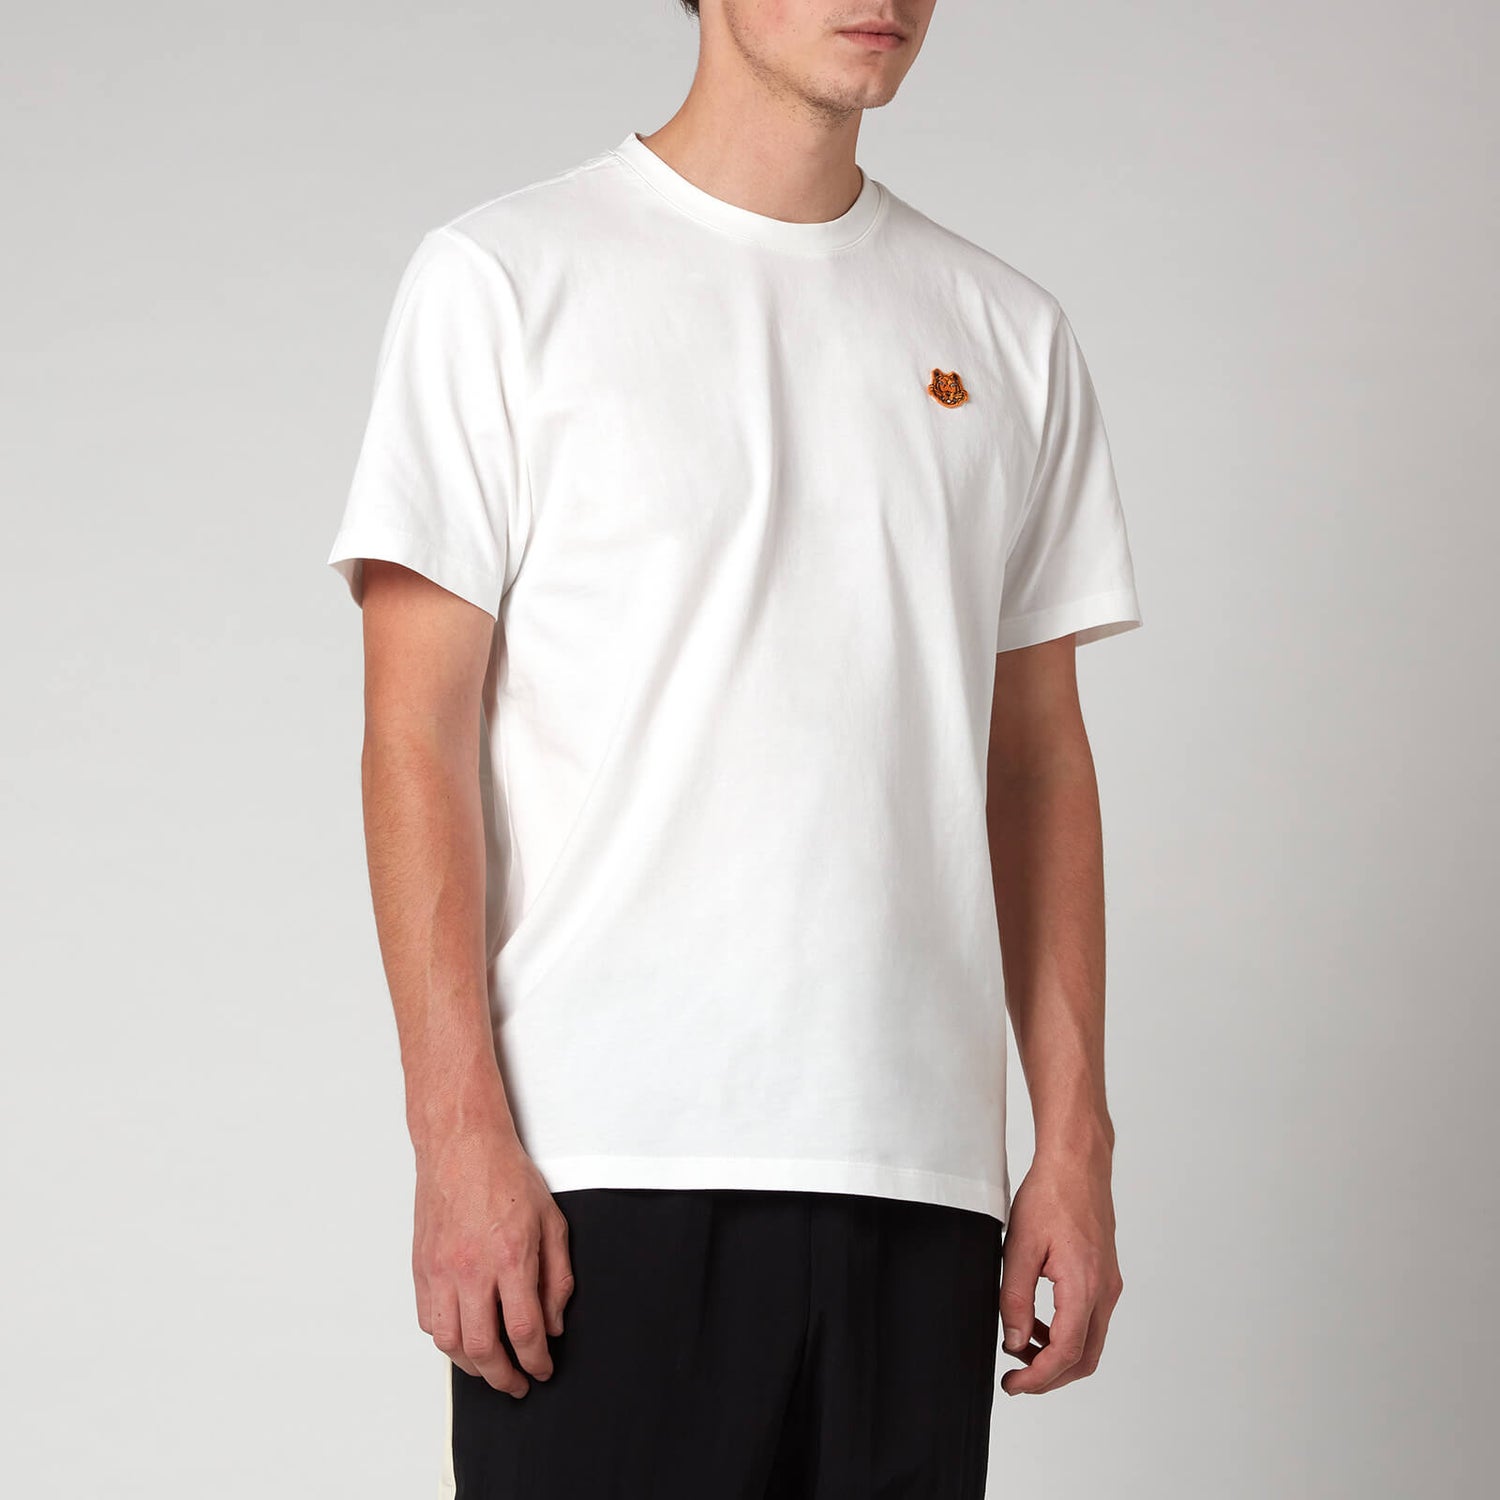 KENZO Men's Tiger Crest Classic T-Shirt - White - L